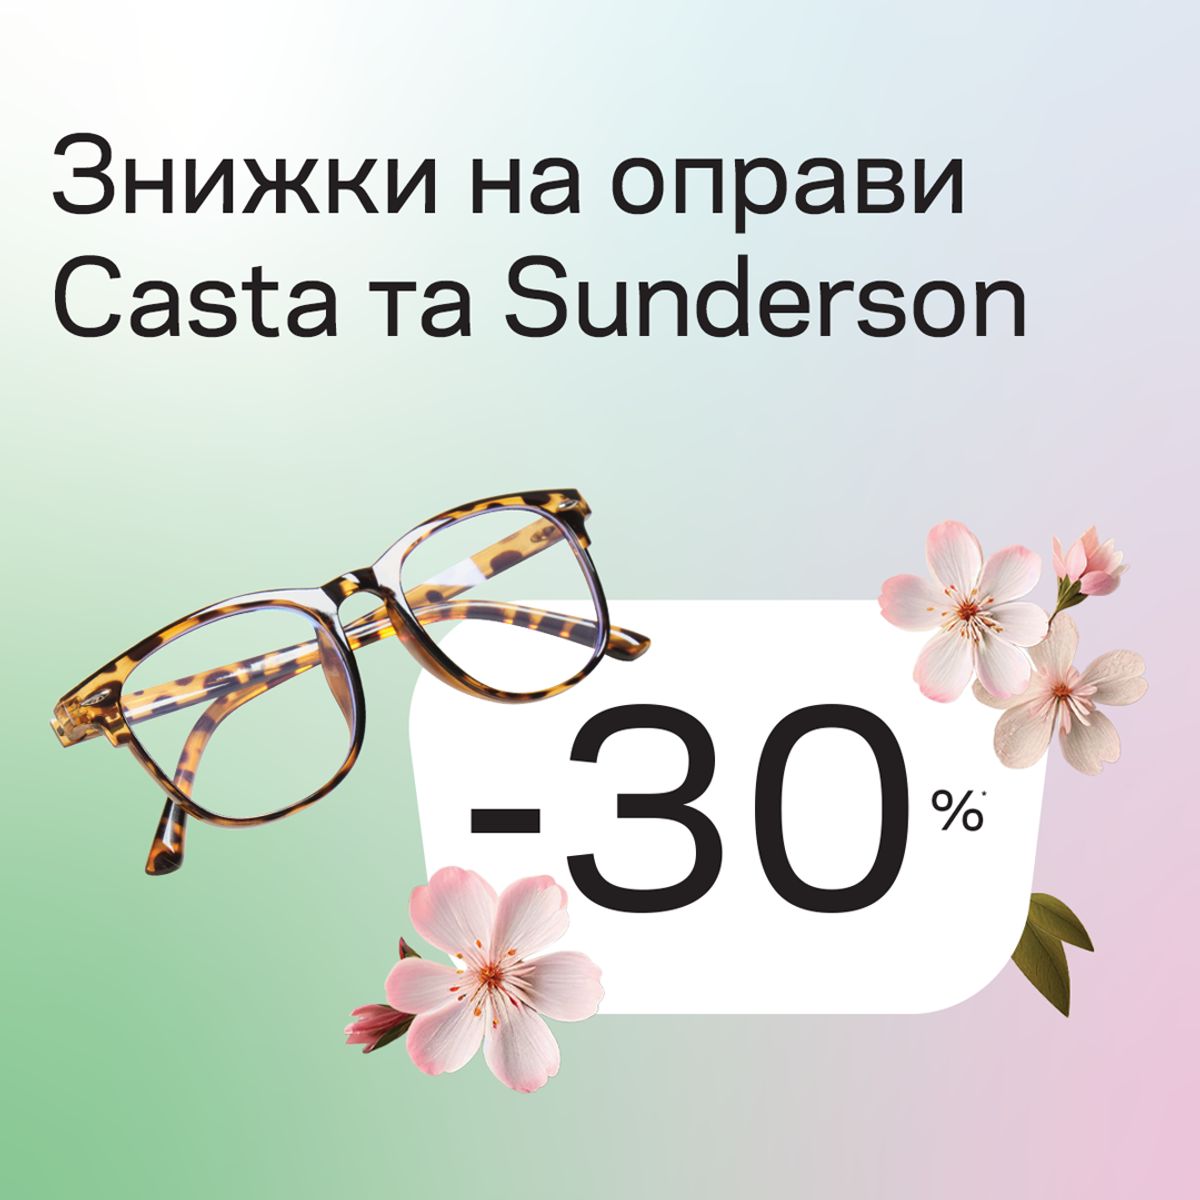 -30% on Casta and Sunderson frames